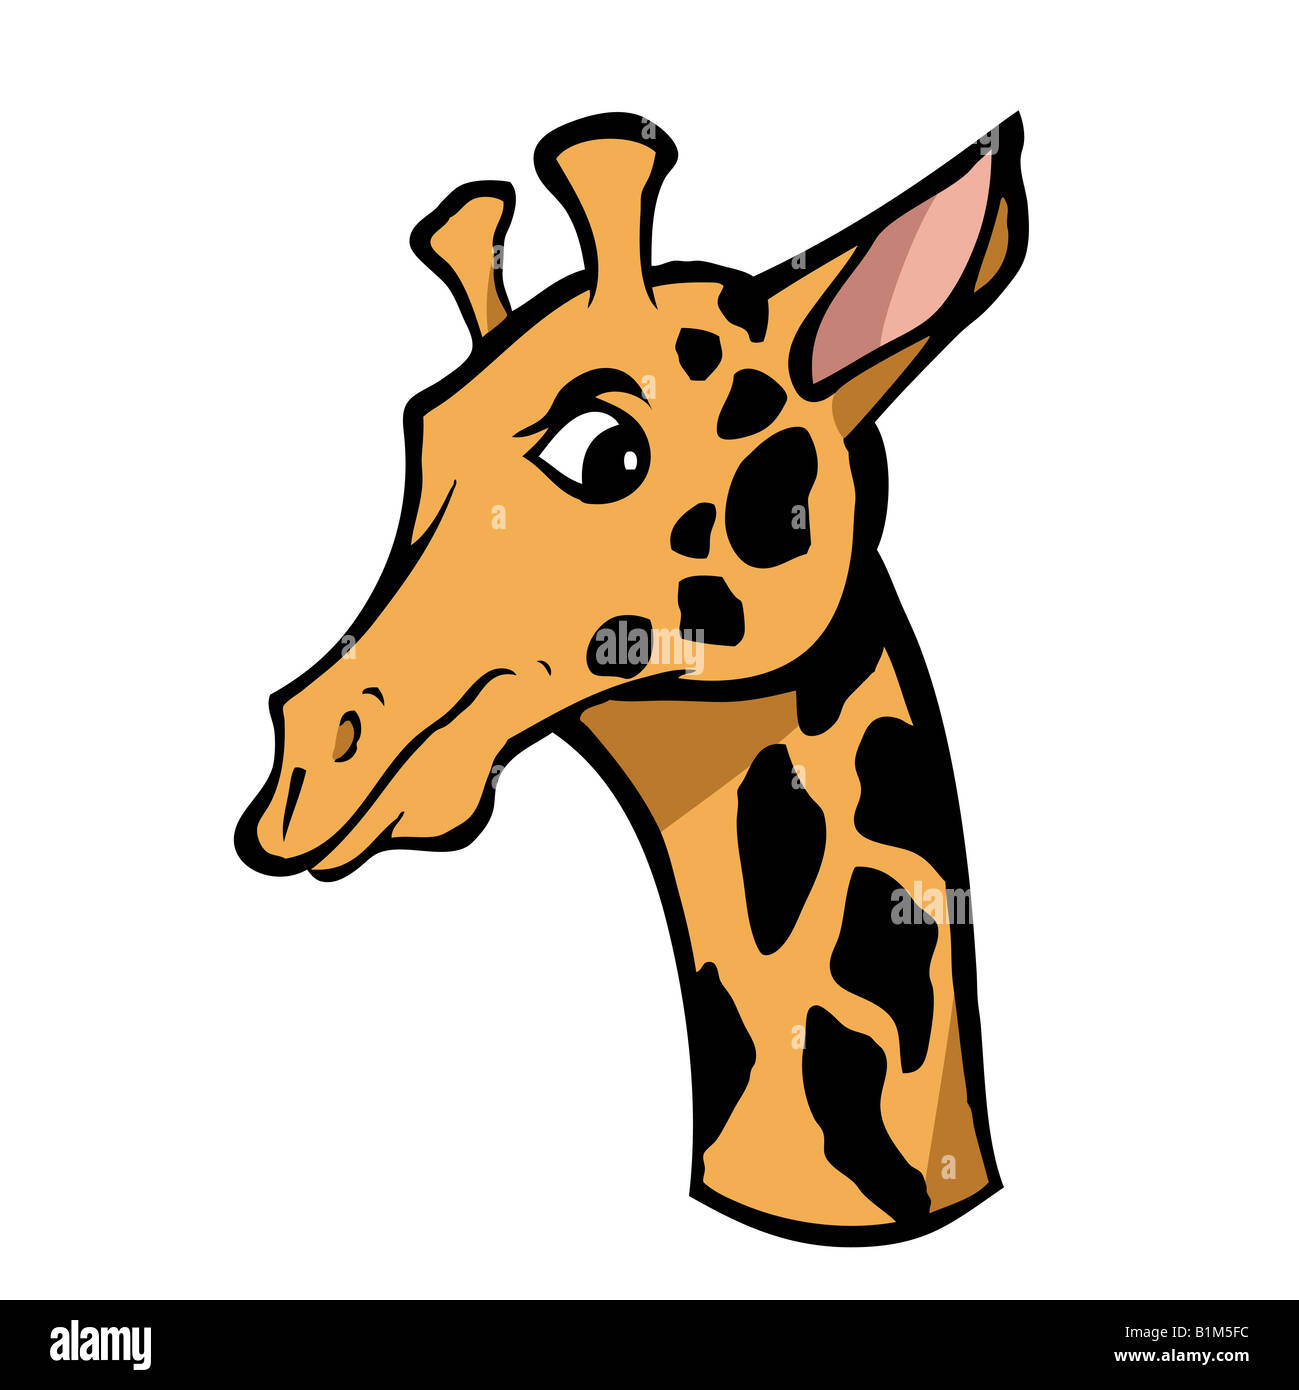 cartoon illustration of a giraffe Stock Photo